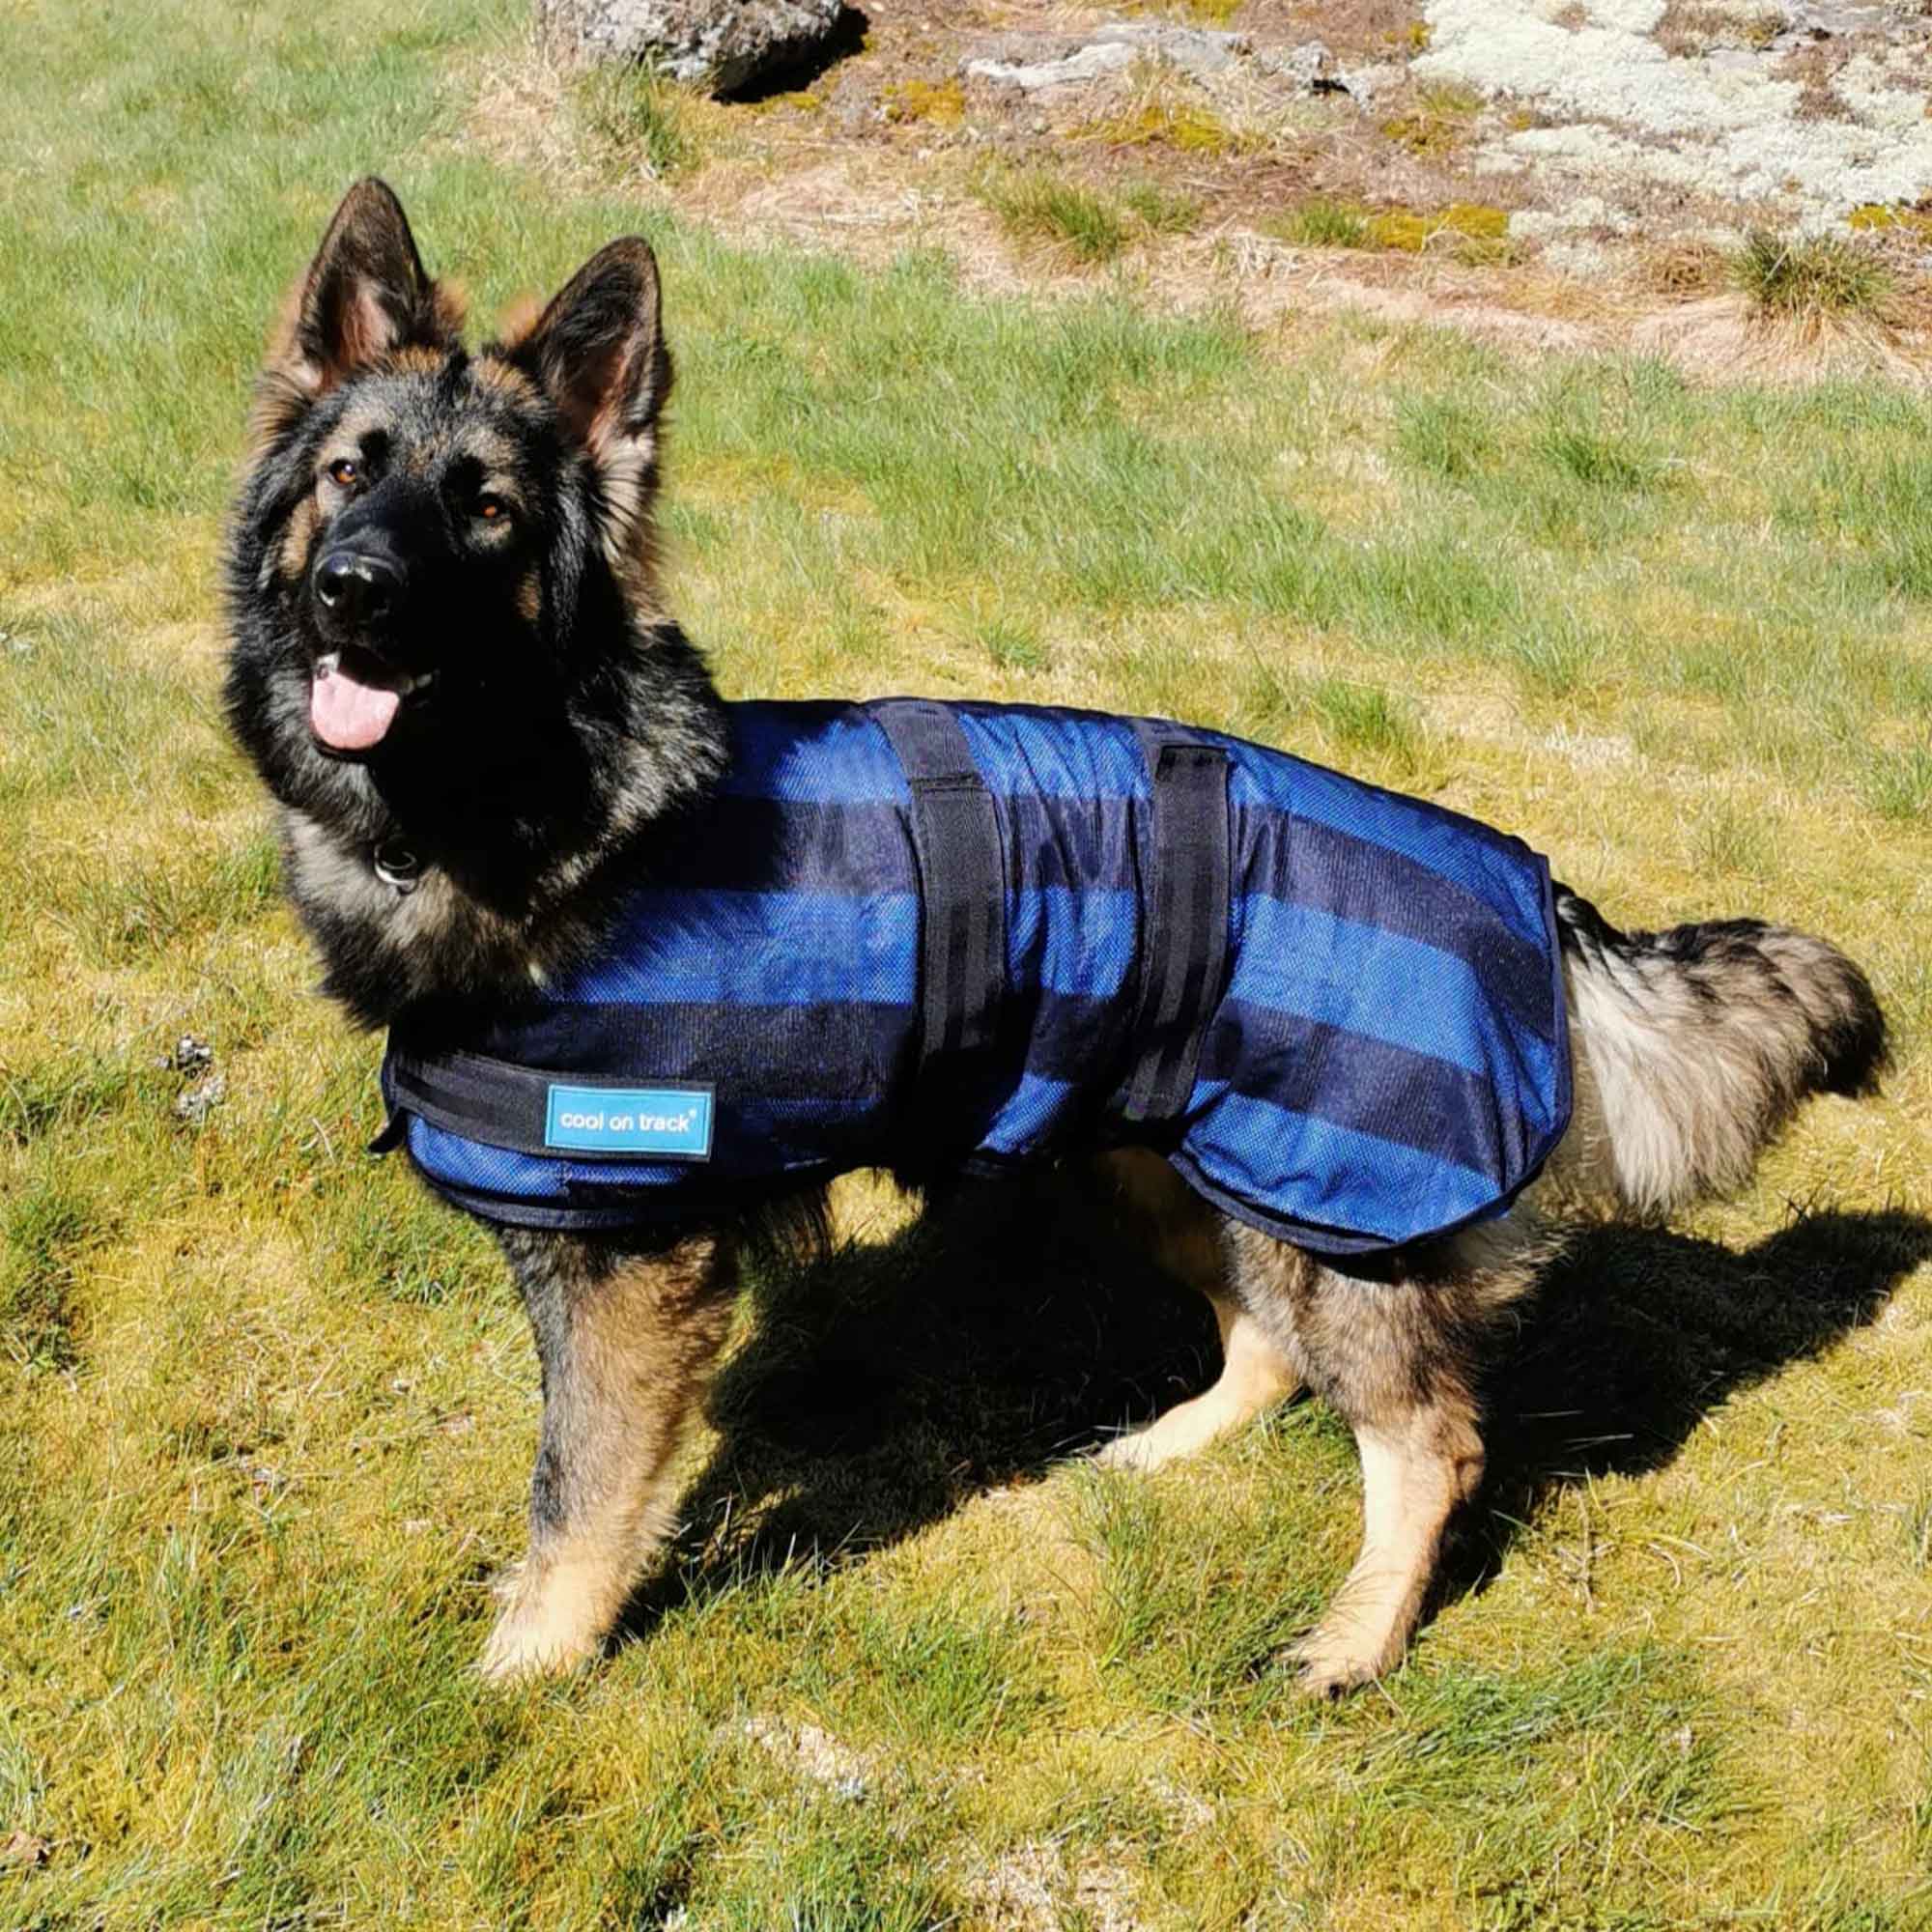 Cool on Track - Cooling Dog Coat